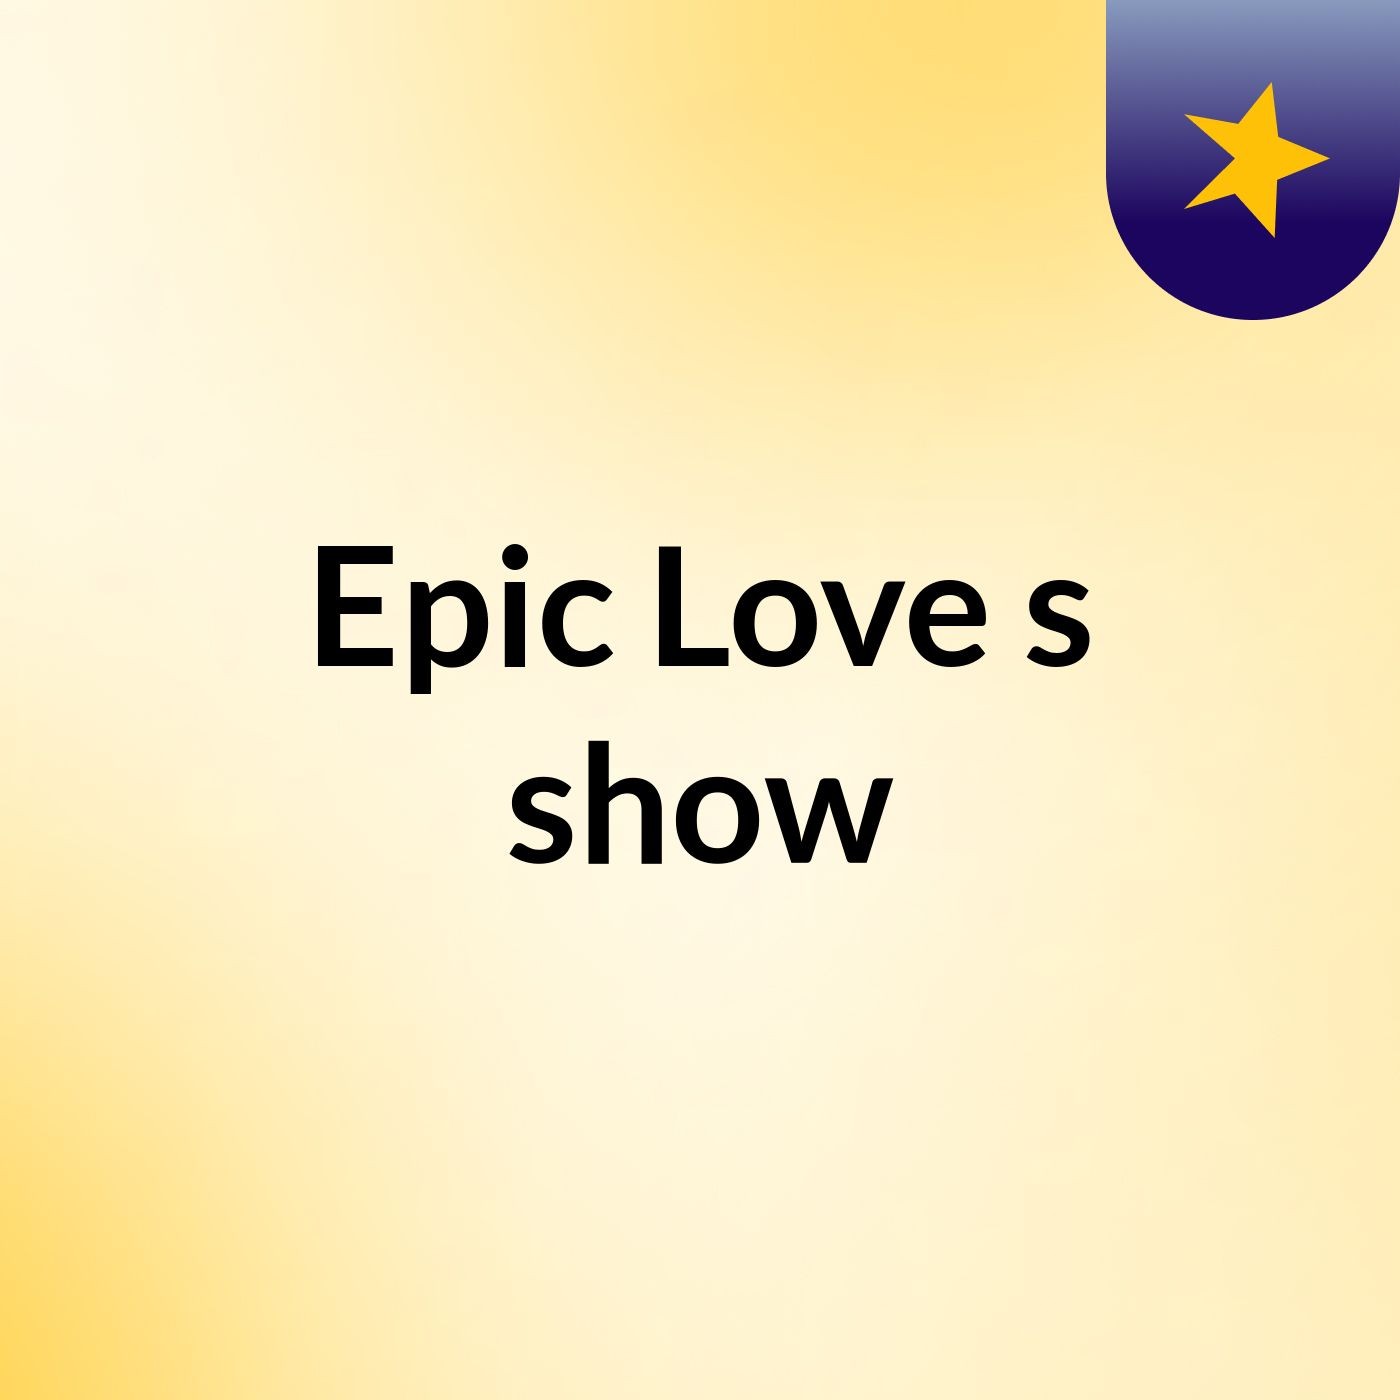 Epic Love's show